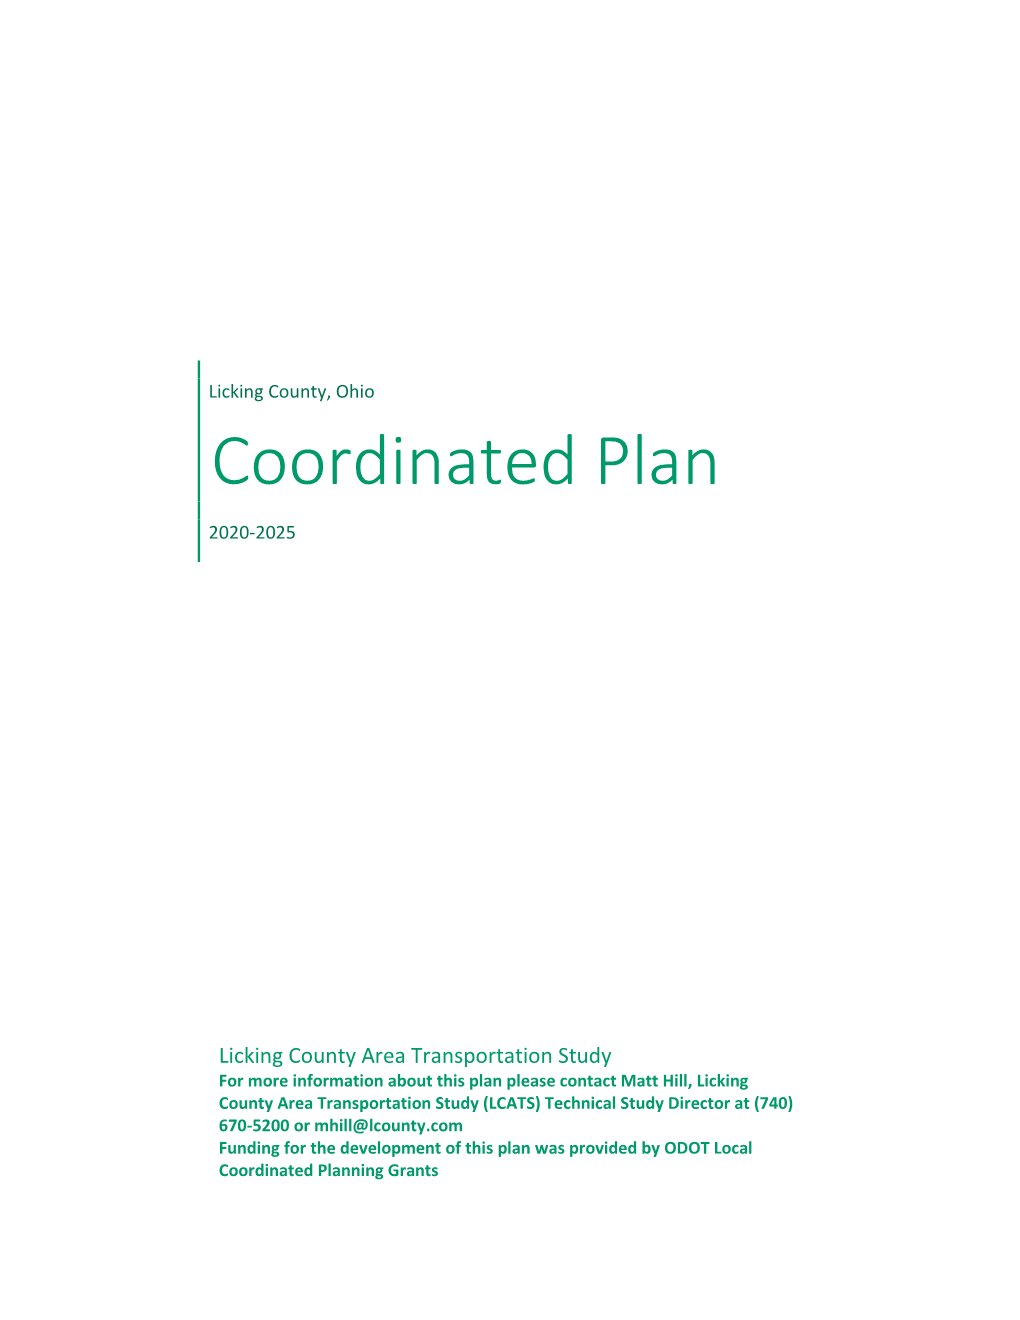 Coordinated Plan